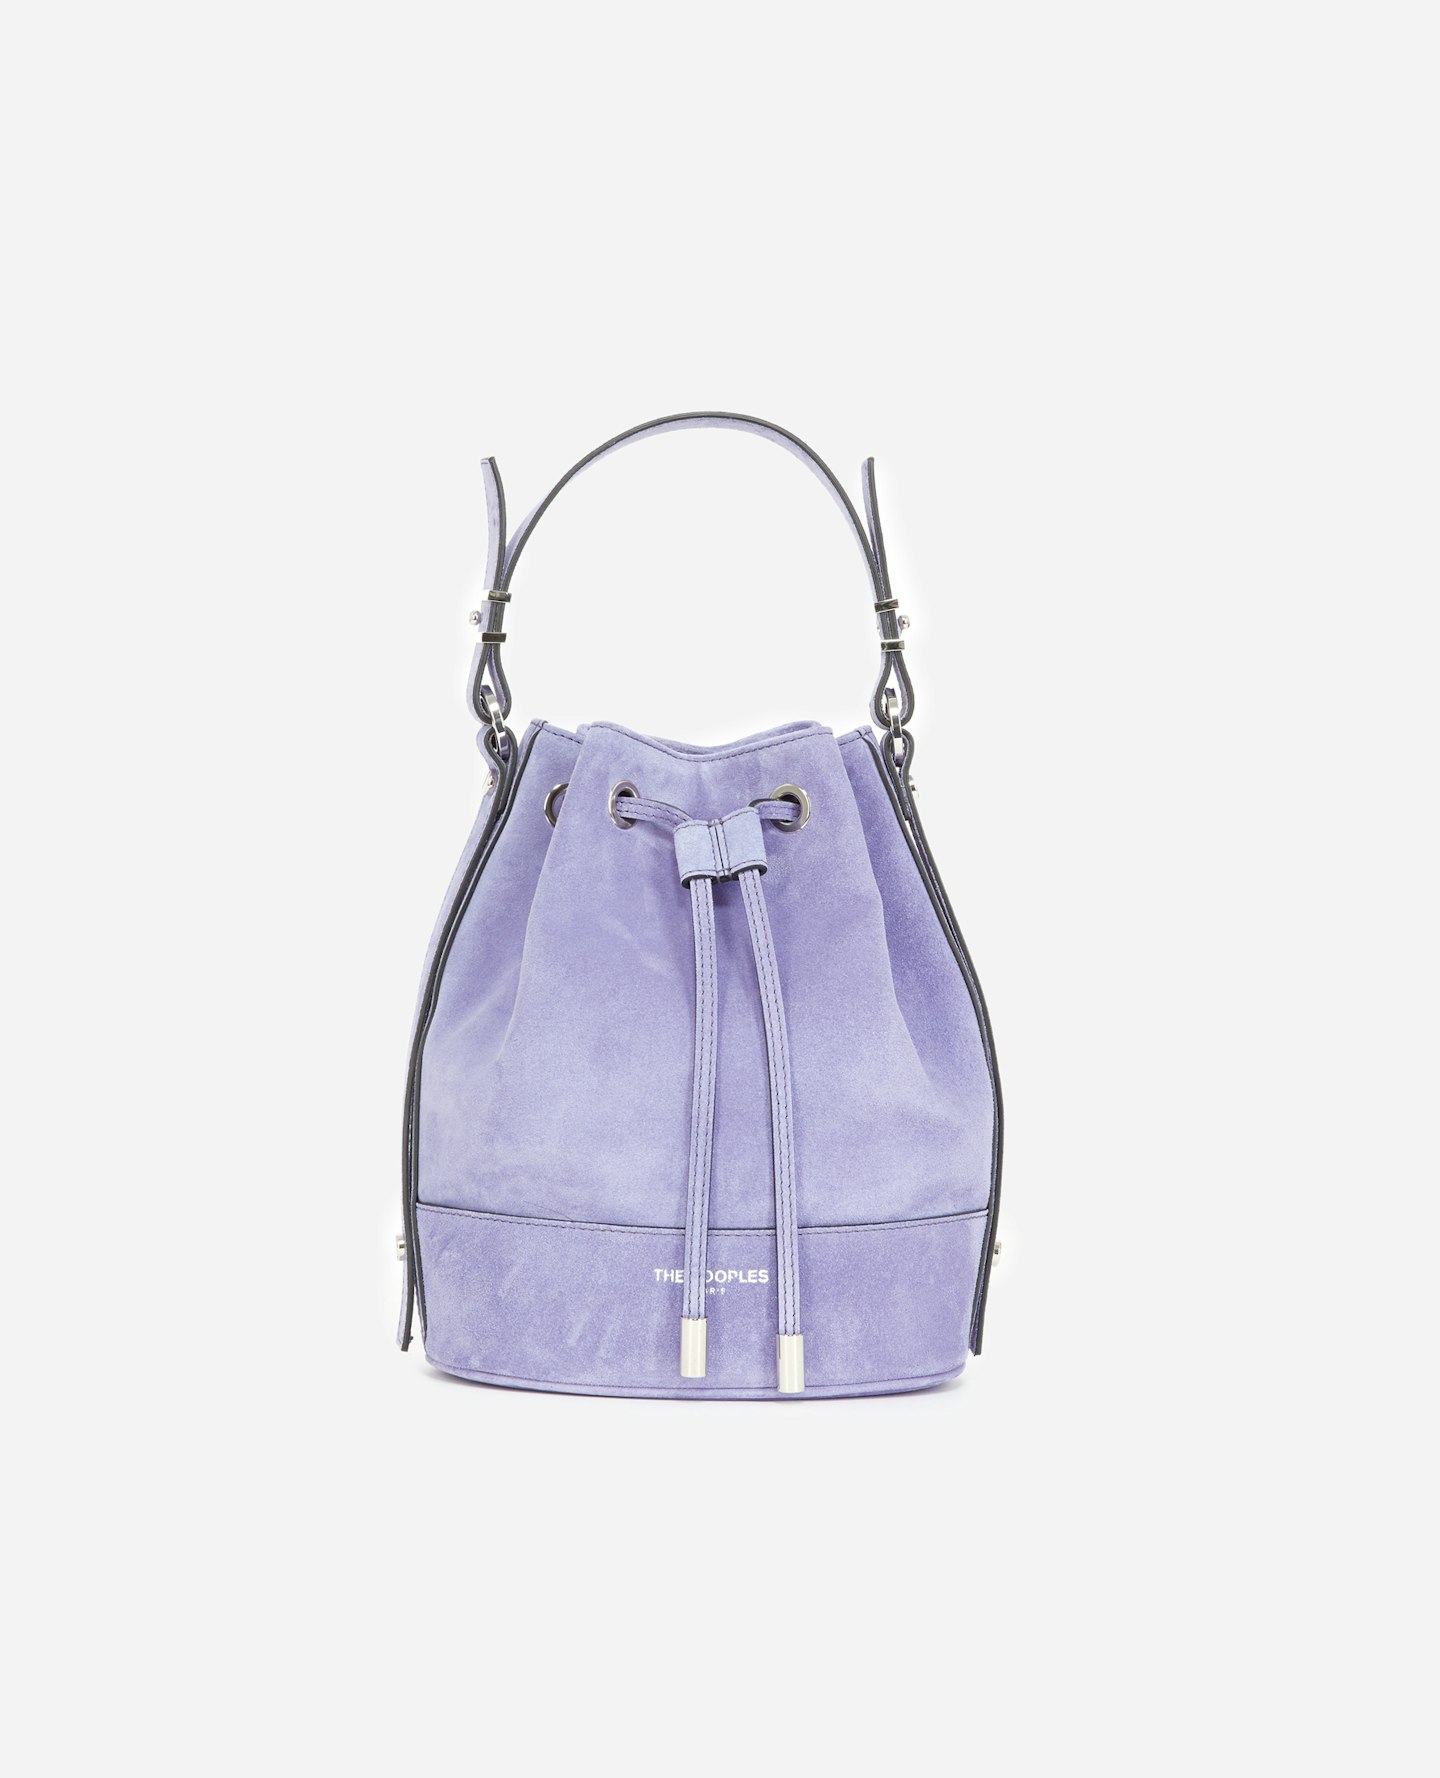 The Kooples, Medium Tina Bag In Purple Suede, £280